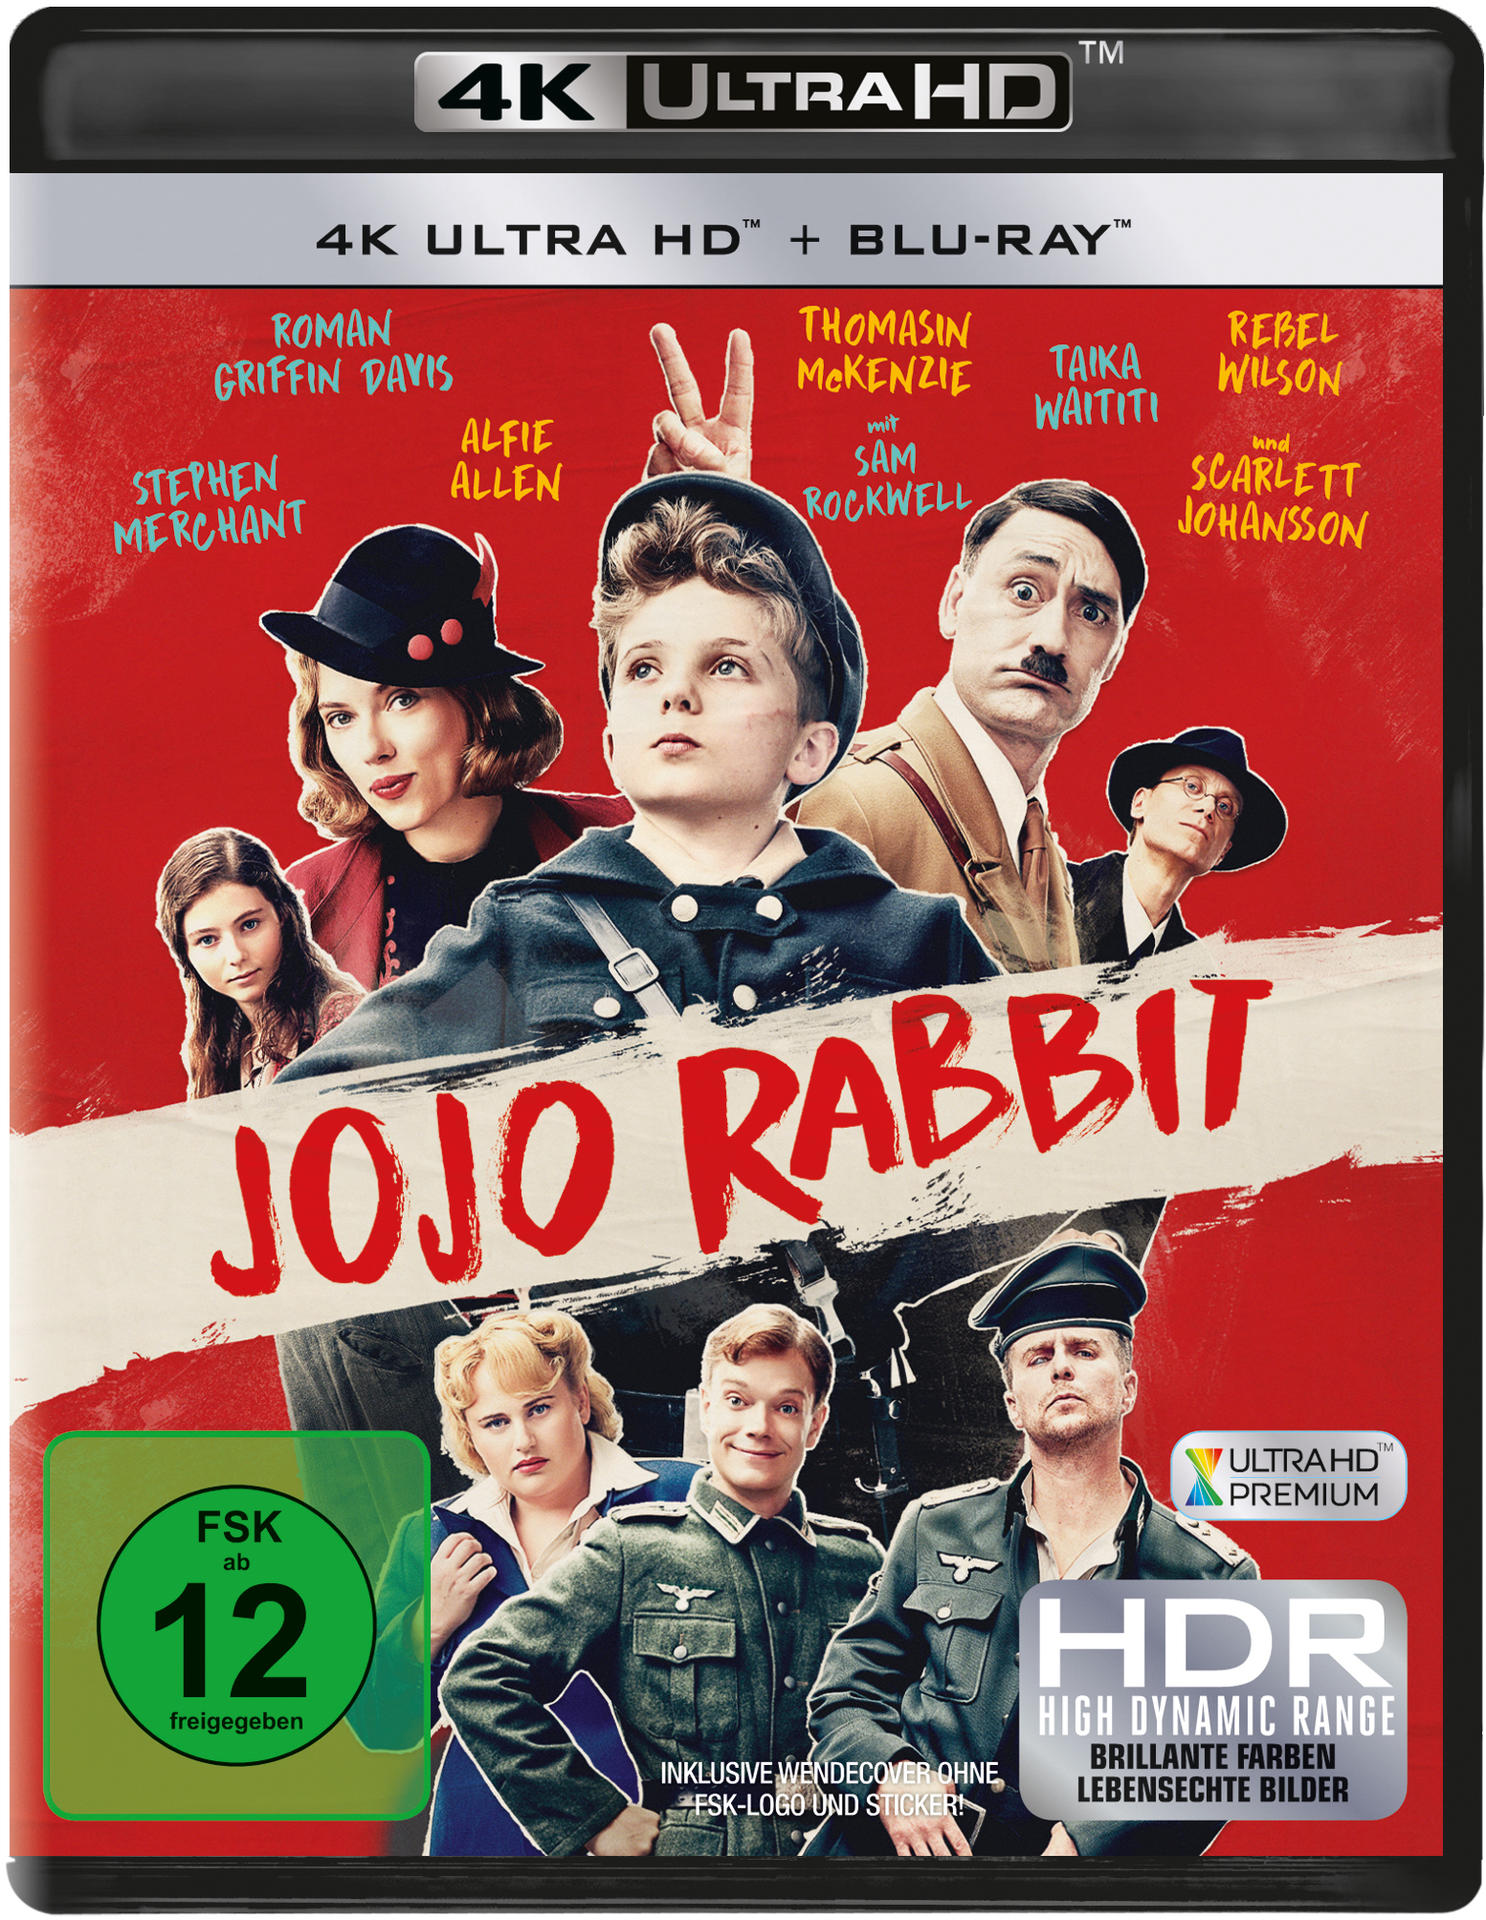 4K HD Rabbit Blu-ray Jojo Ultra + Blu-ray